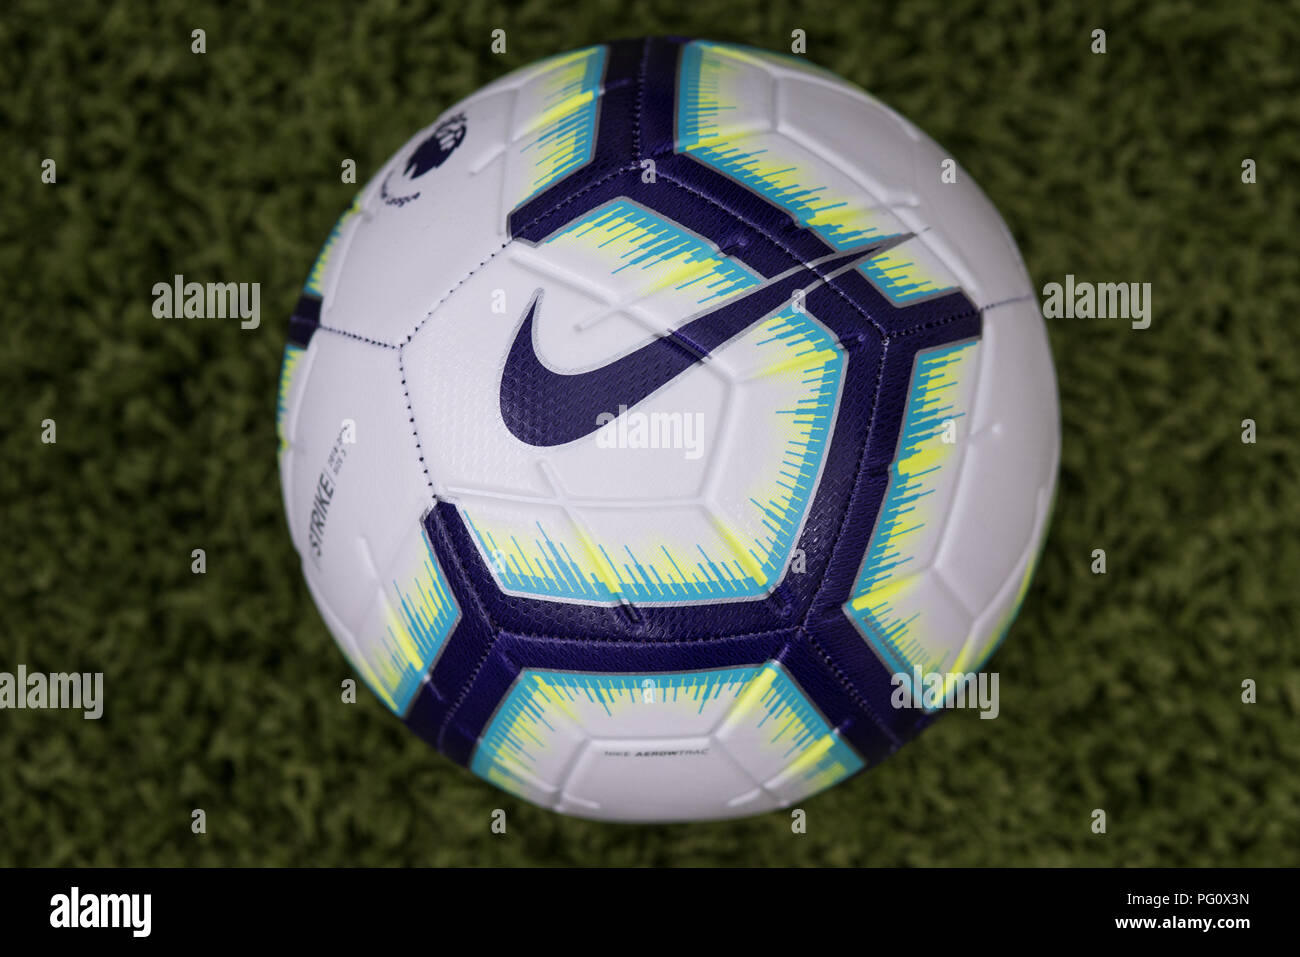 Nike premier league football 18 19 fotografías e imágenes alta - Alamy